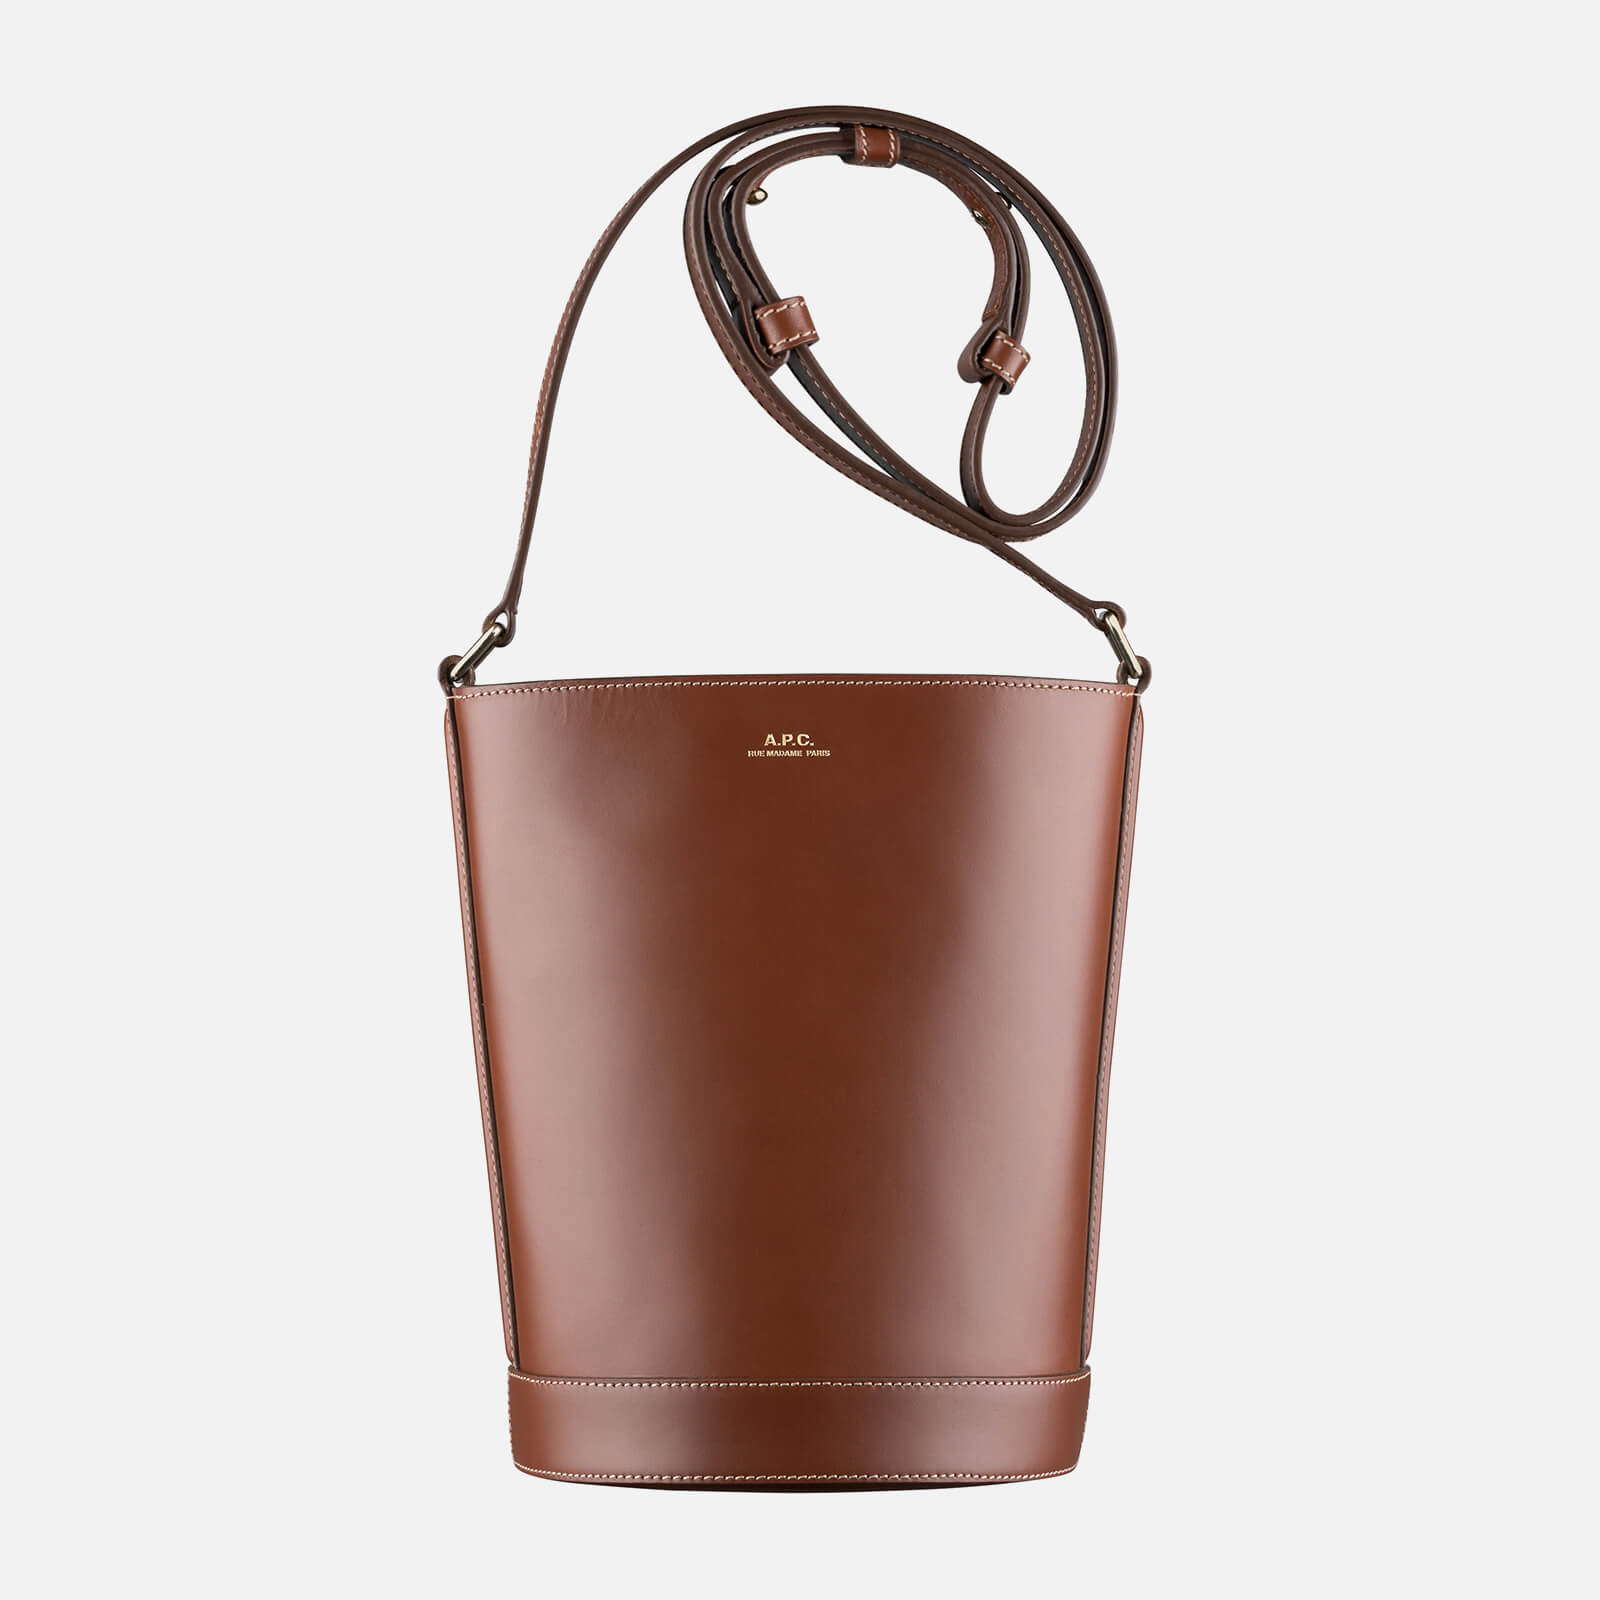 A.P.C. Ambre Leather Bucket Bag